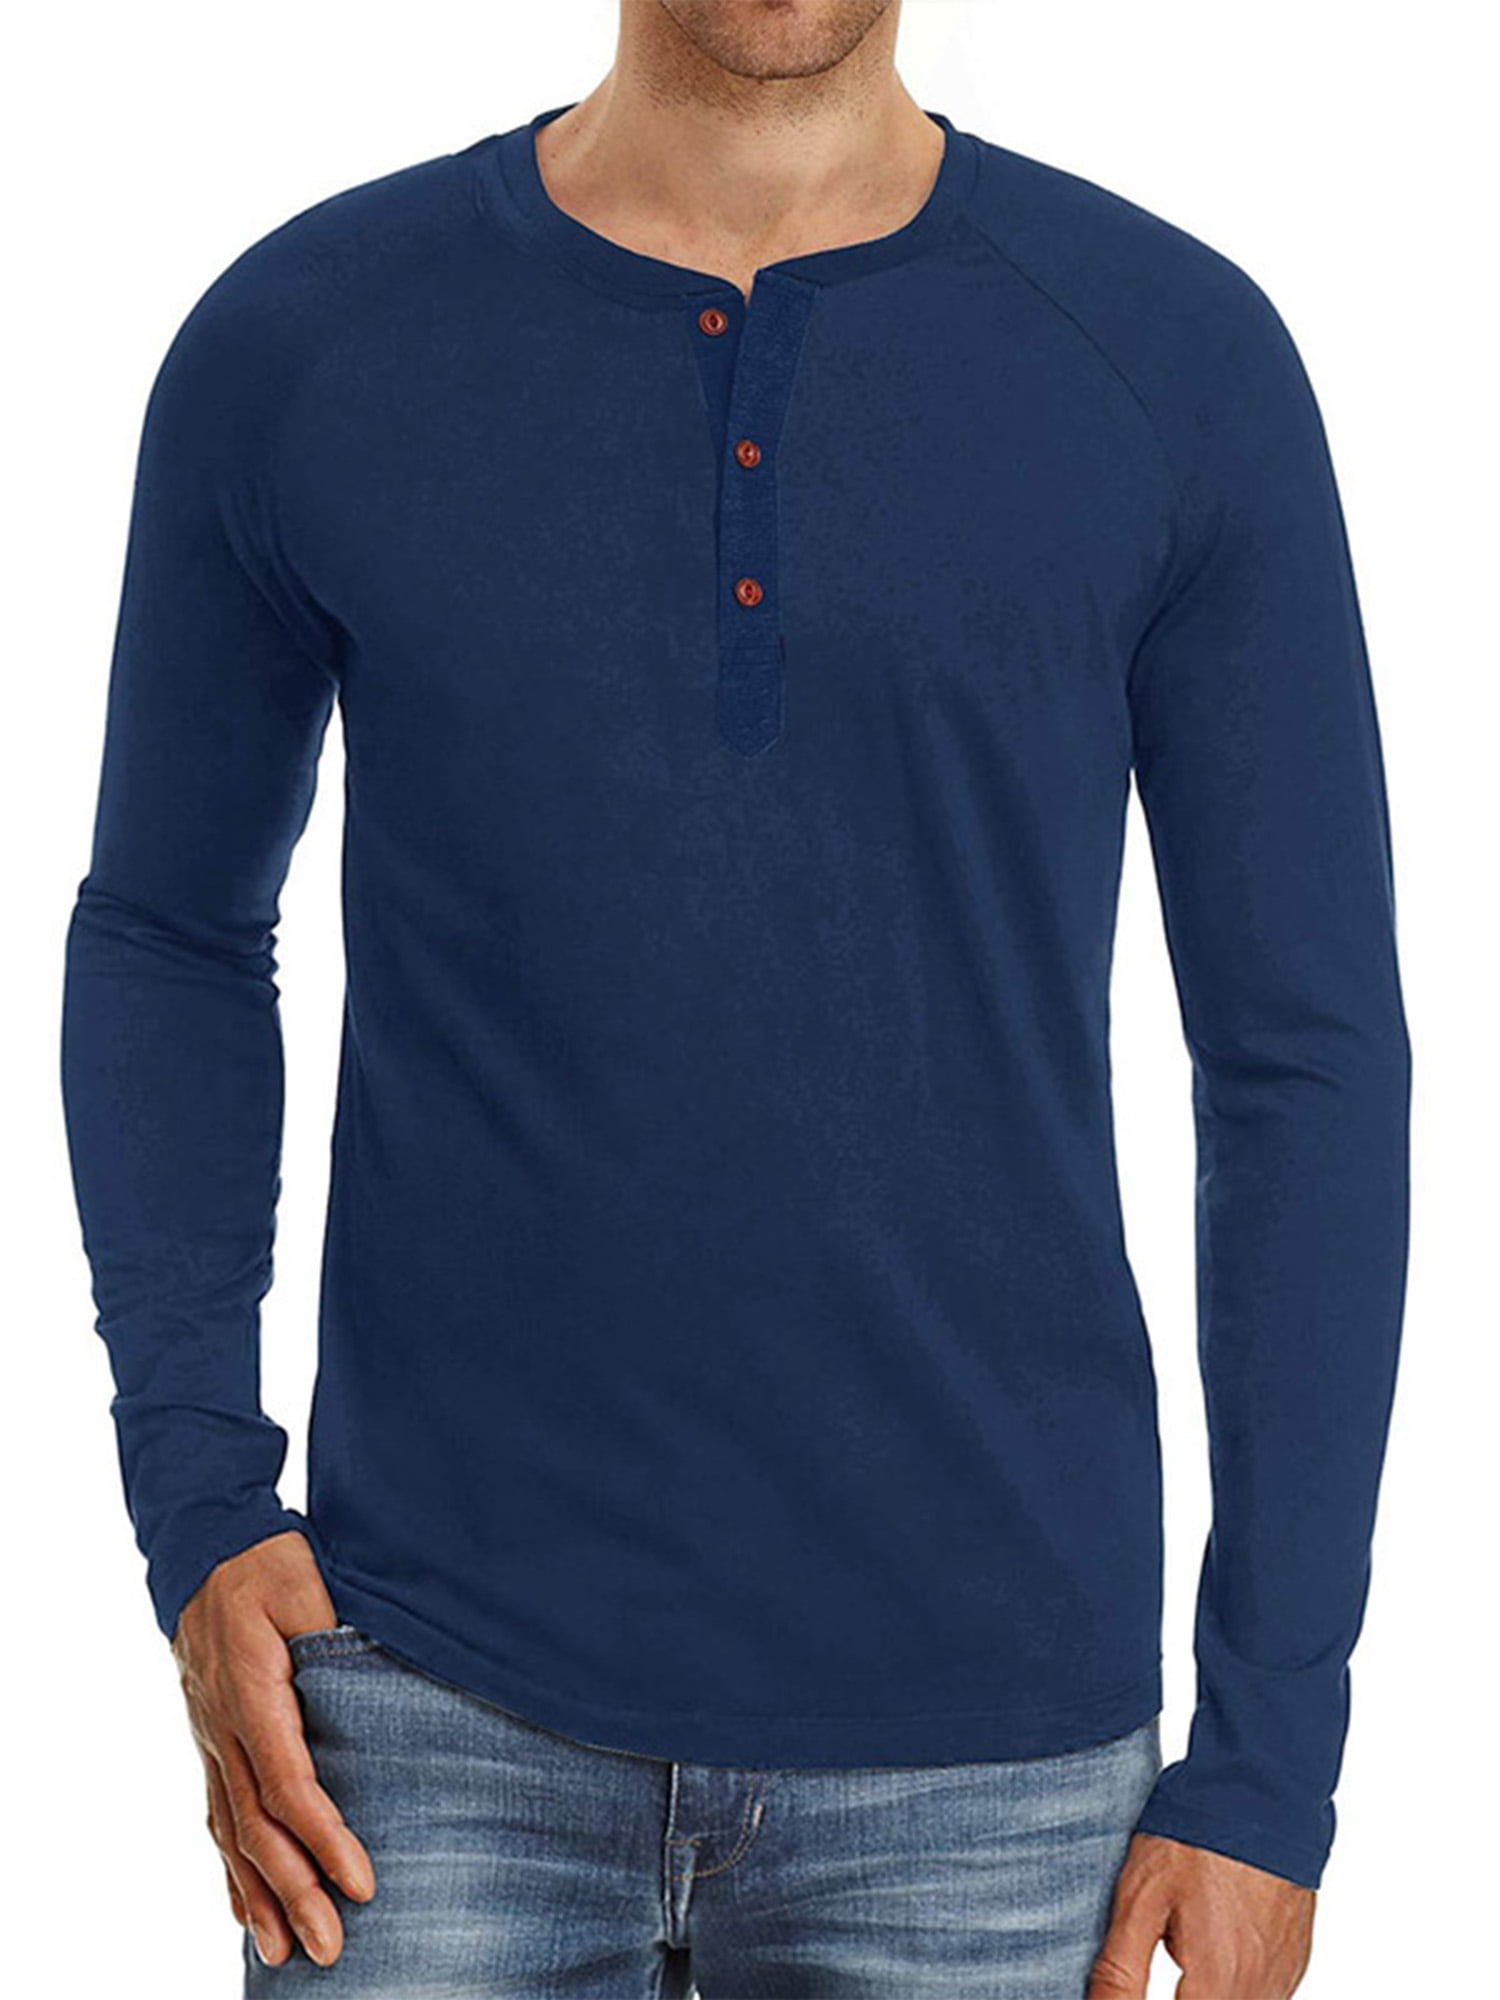 NITAGUT Men's Casual Slim Fit Long/Short Sleeve Pocket T-Shirts V Neck Tops 